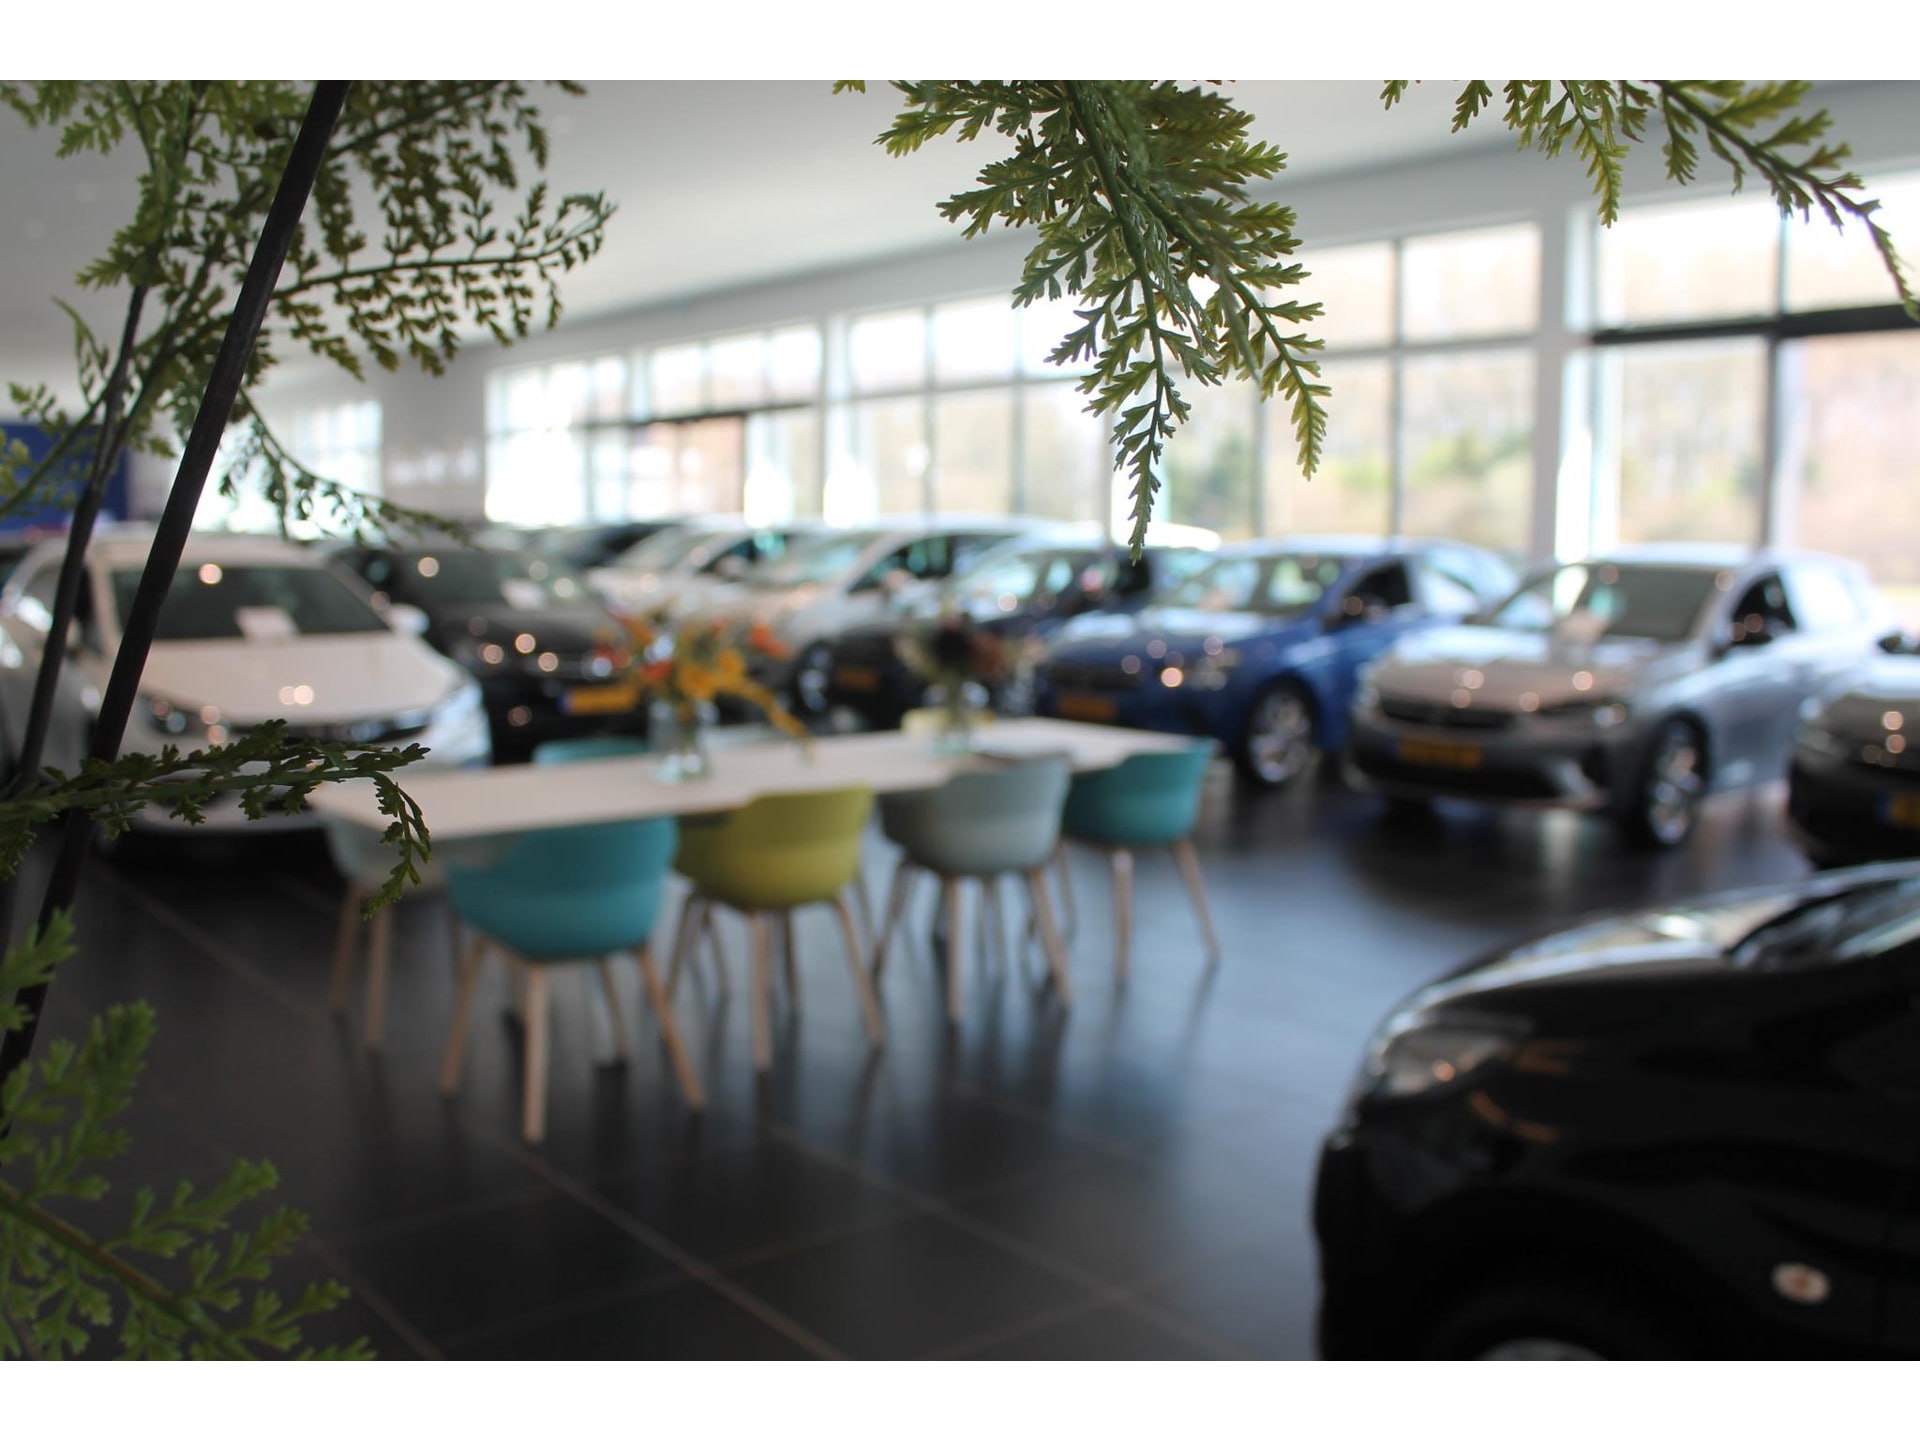 Opel Vivaro-e L3H1 Edition 75 kWh | 329km rijbereik WLTP | Parkeersensoren | Airco | Houten laadvloer